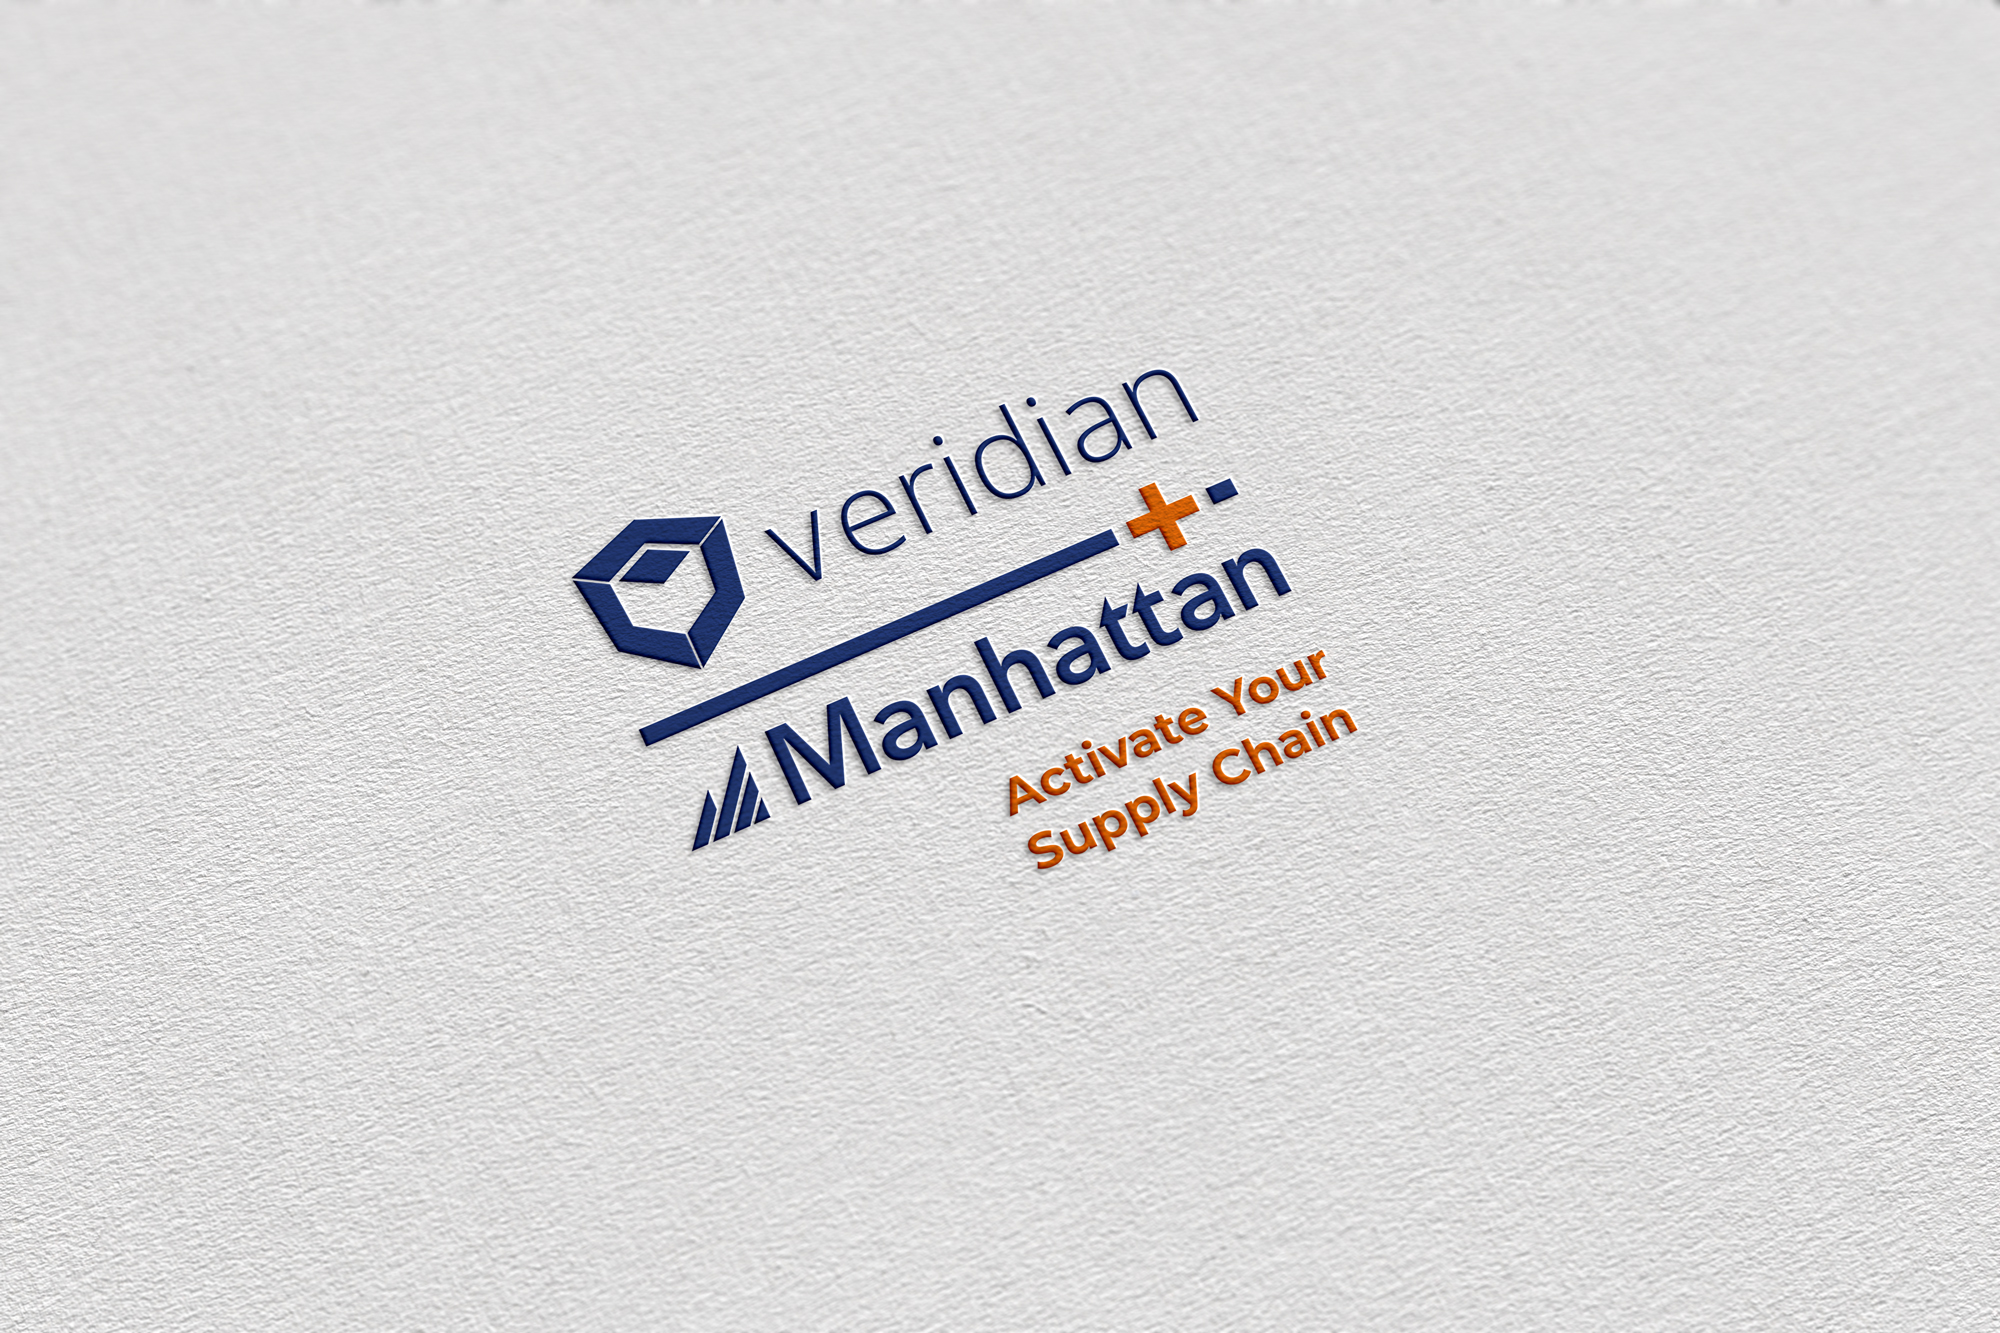 Veridian + Manhattan - Brand Design